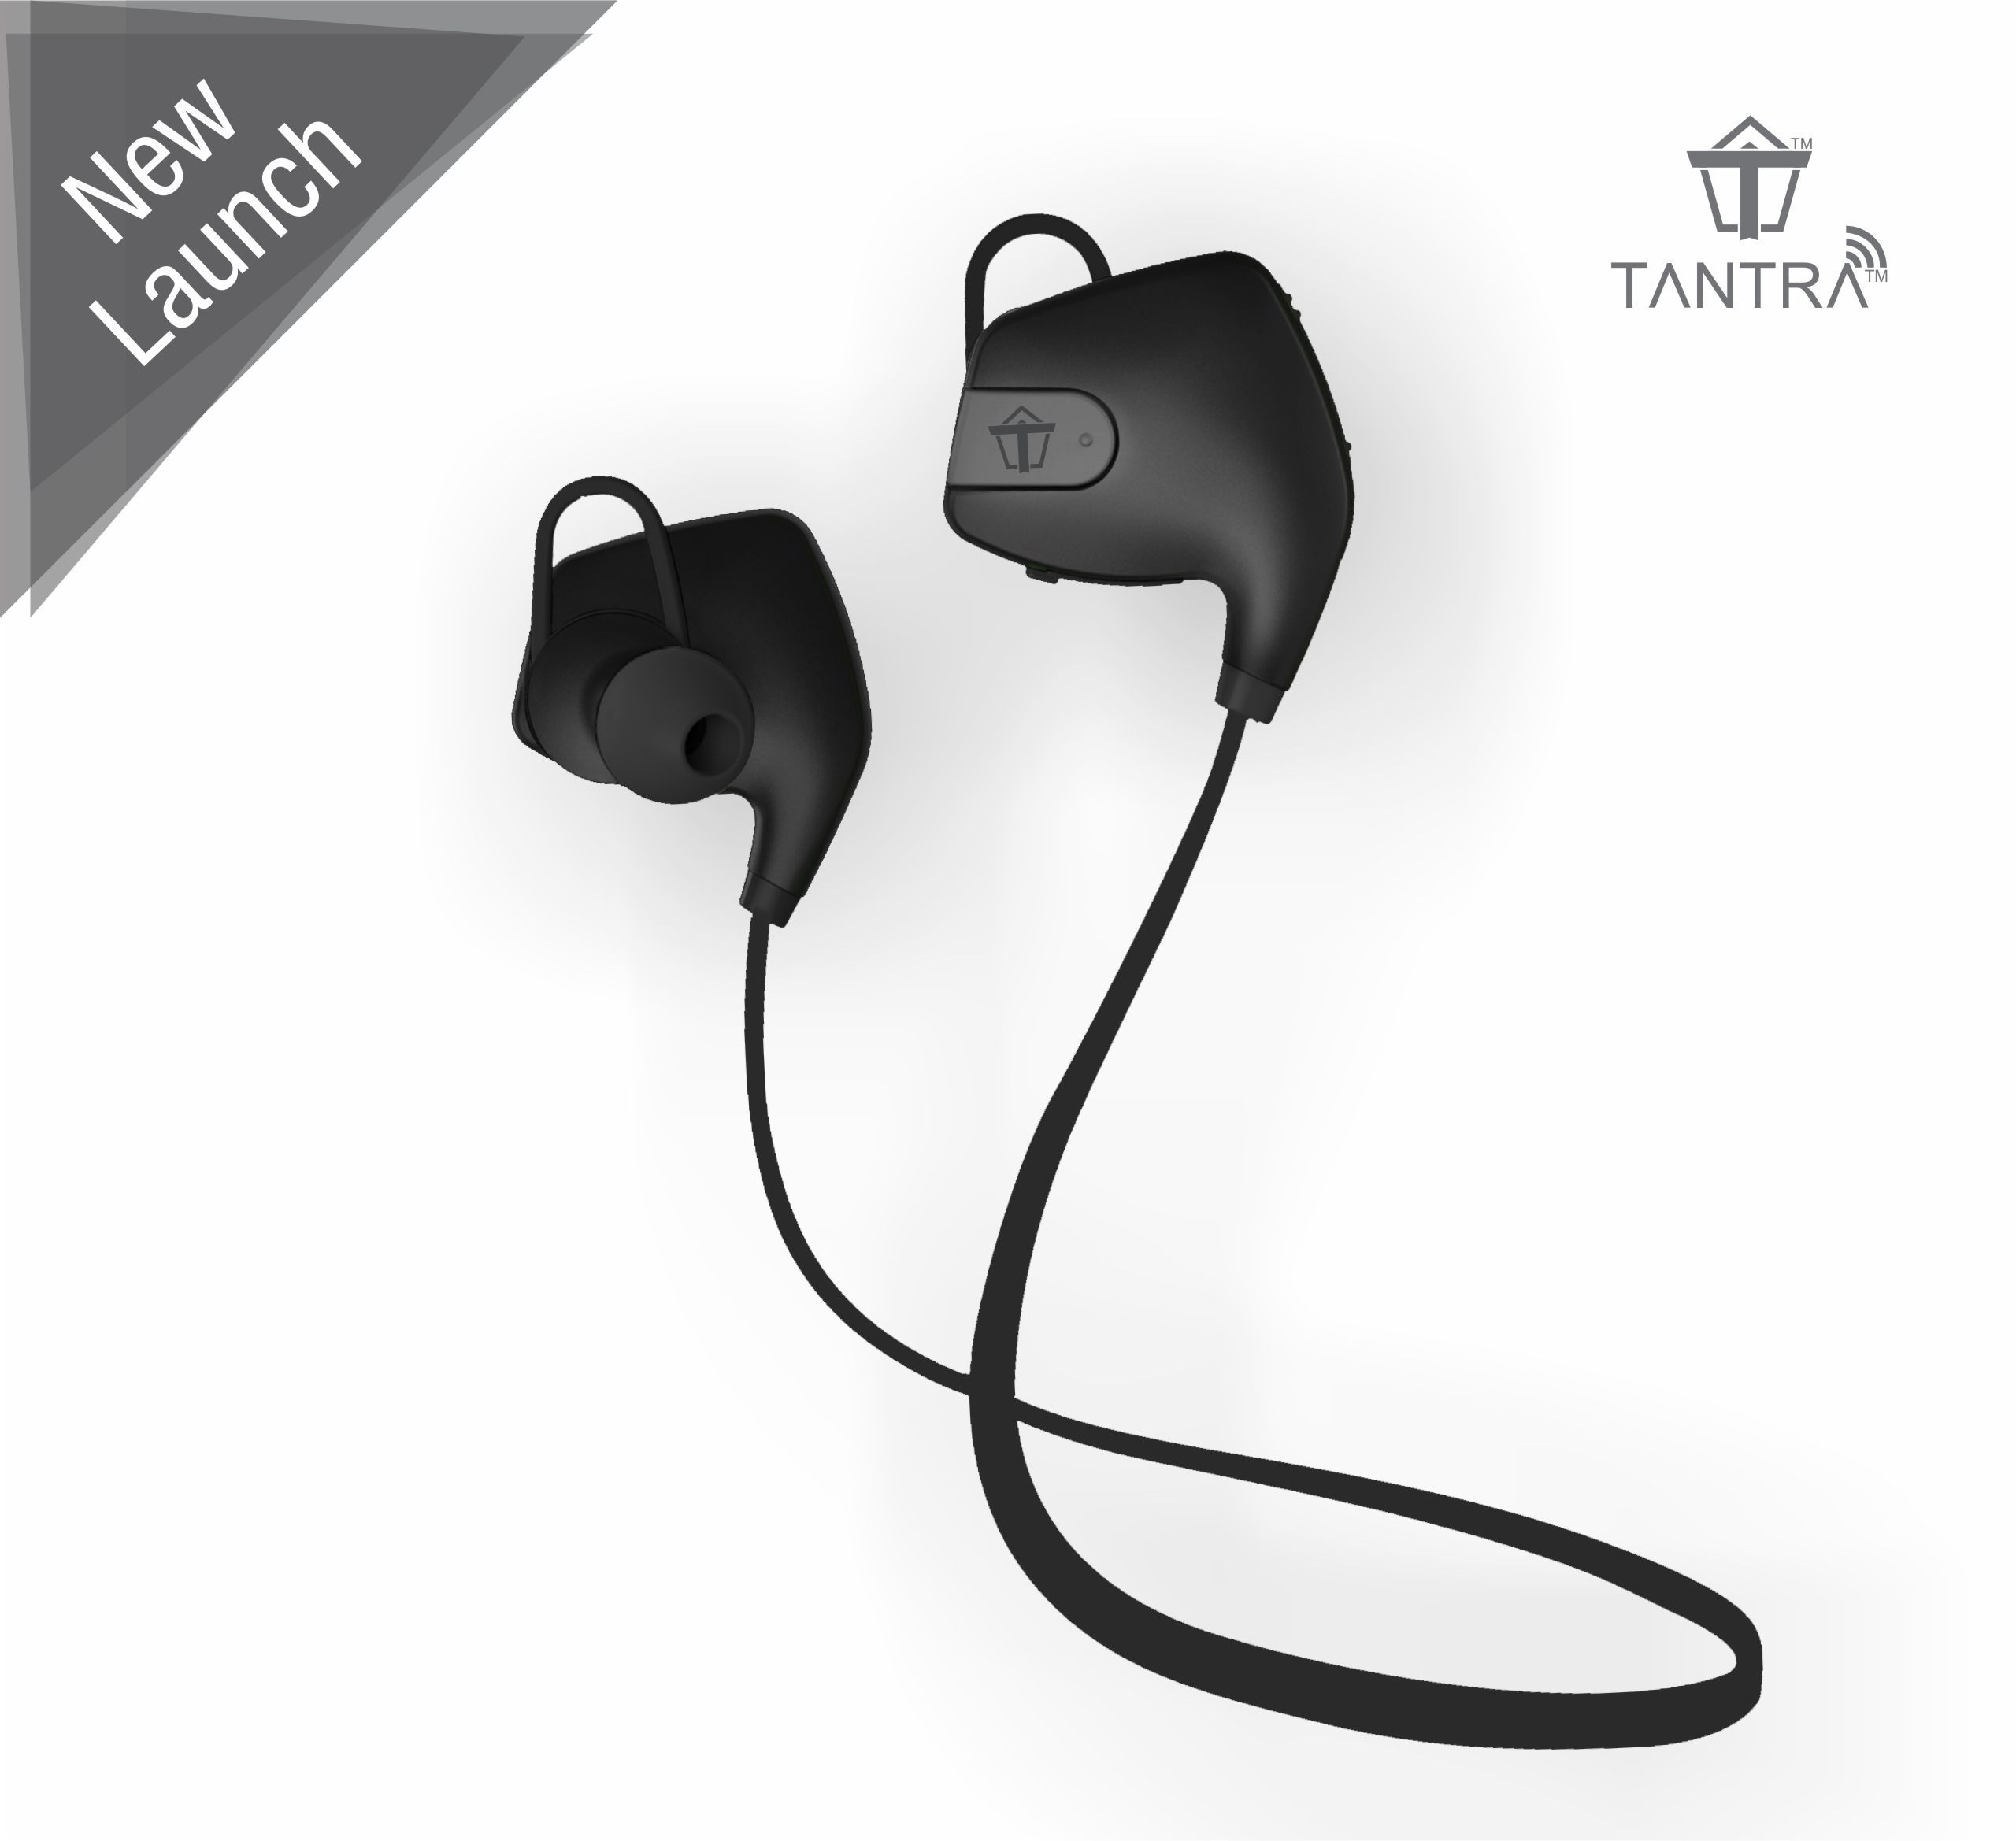     			Tantra Wireless With Mic Headphones/Earphones